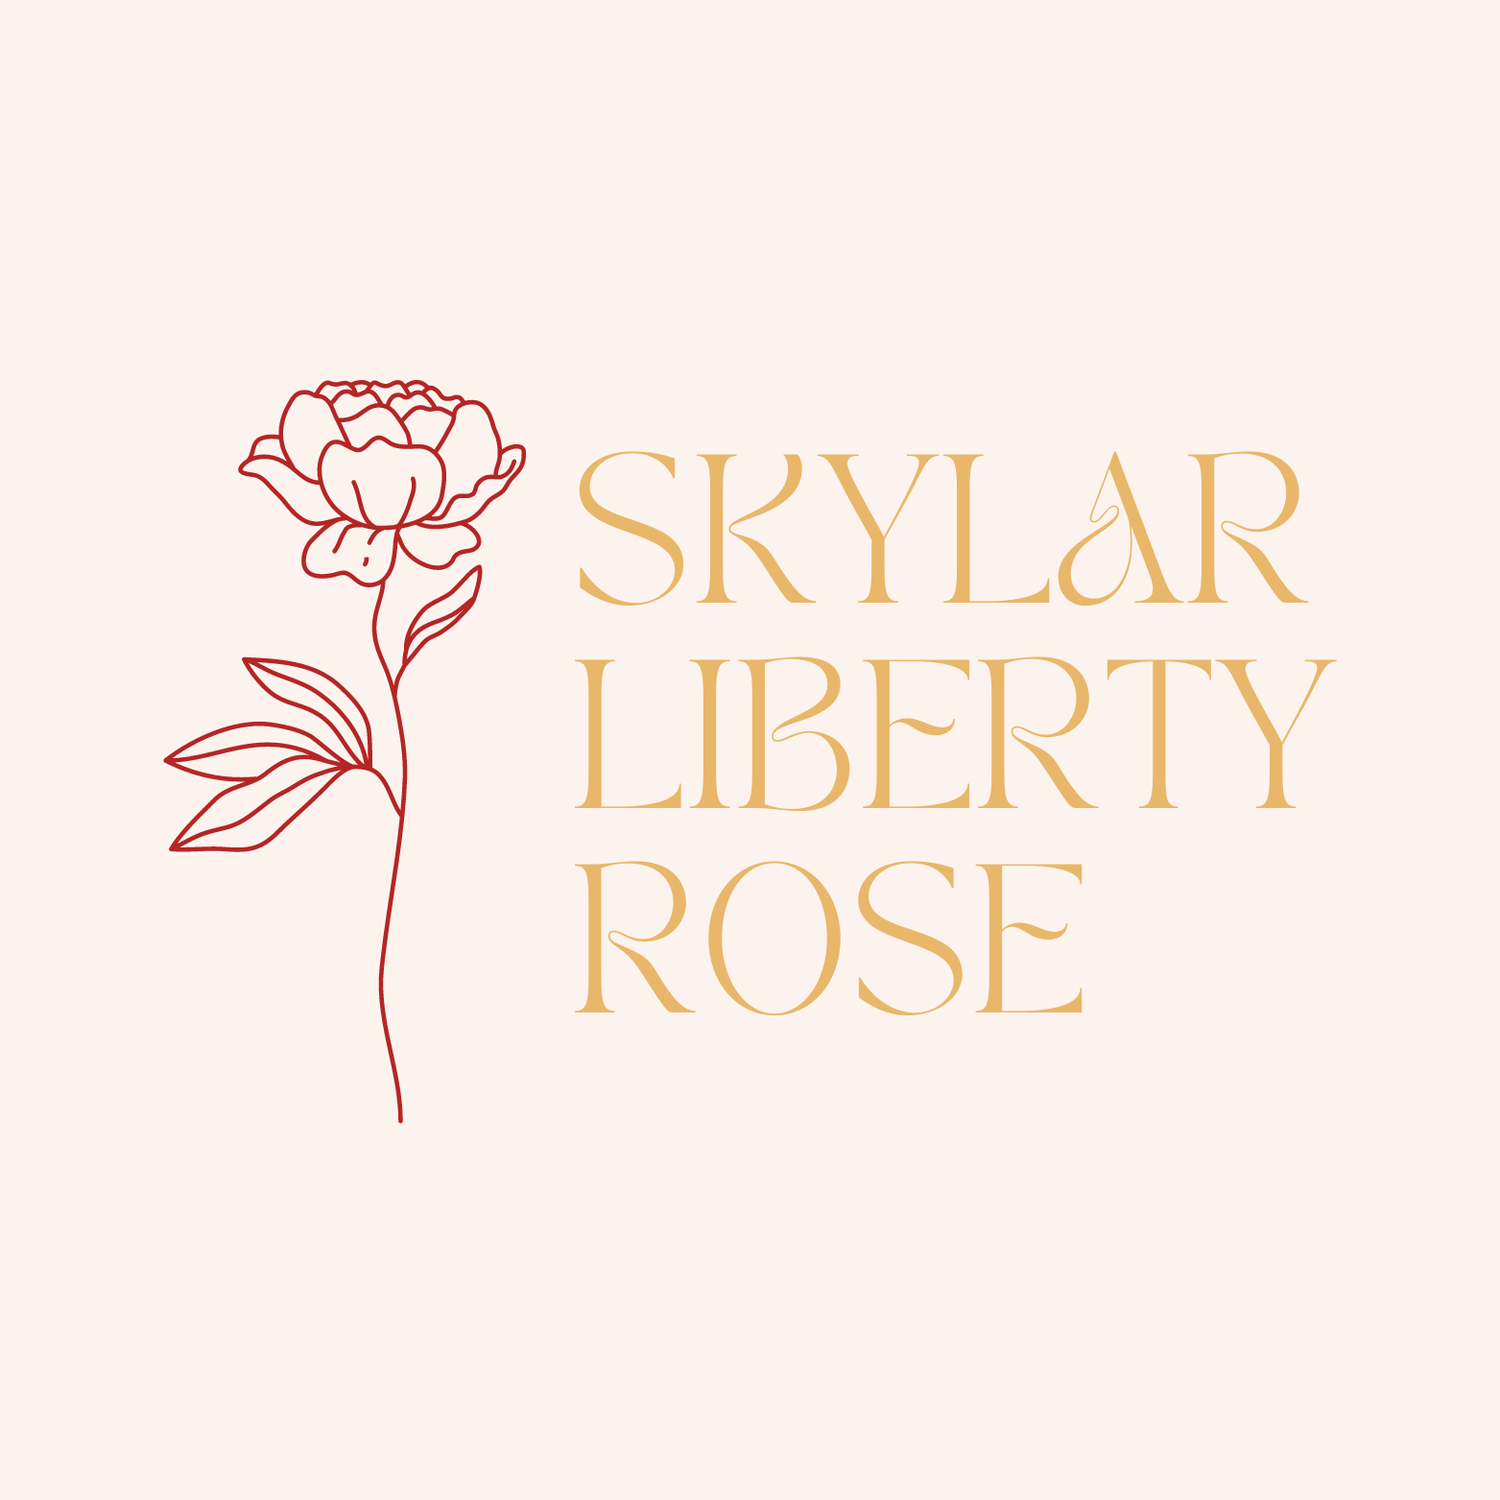 Skylar Liberty Rose